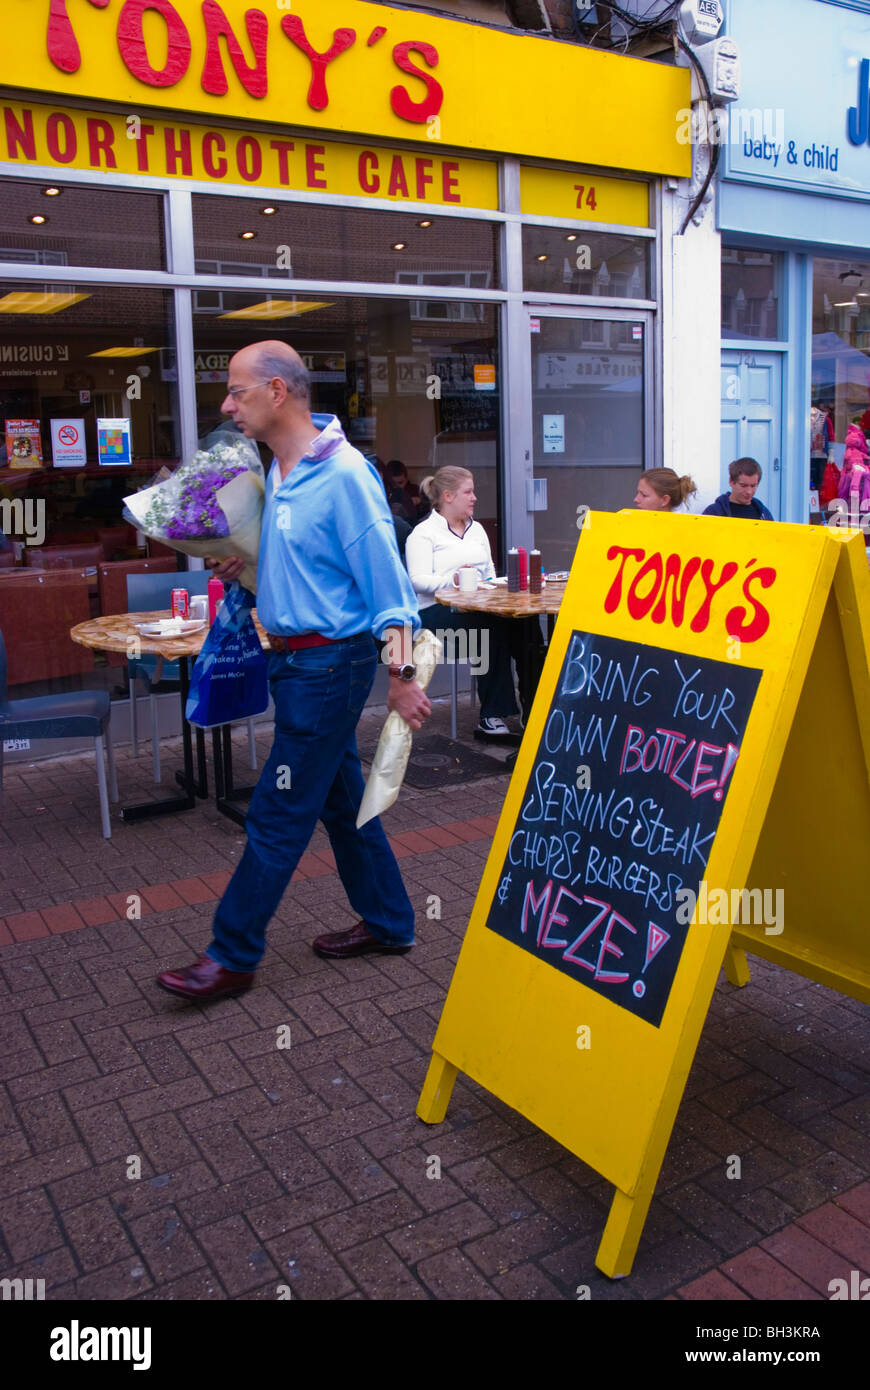 Tony's Cafe Northcote Road Wandsworth South London England UK Europe Stock Photo